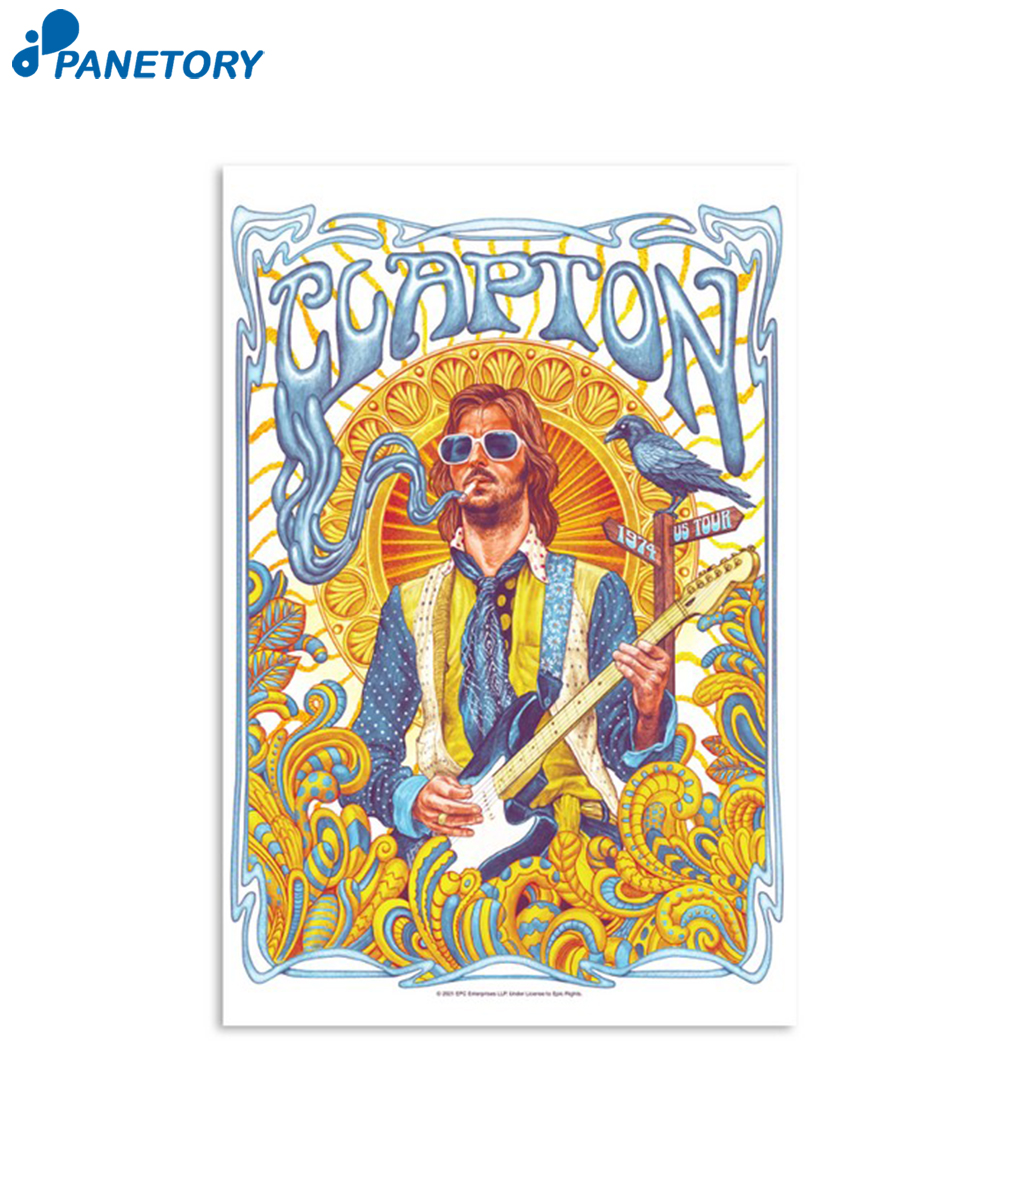 Eric Clapton 1974 Tour Ocean Boulevard Poster